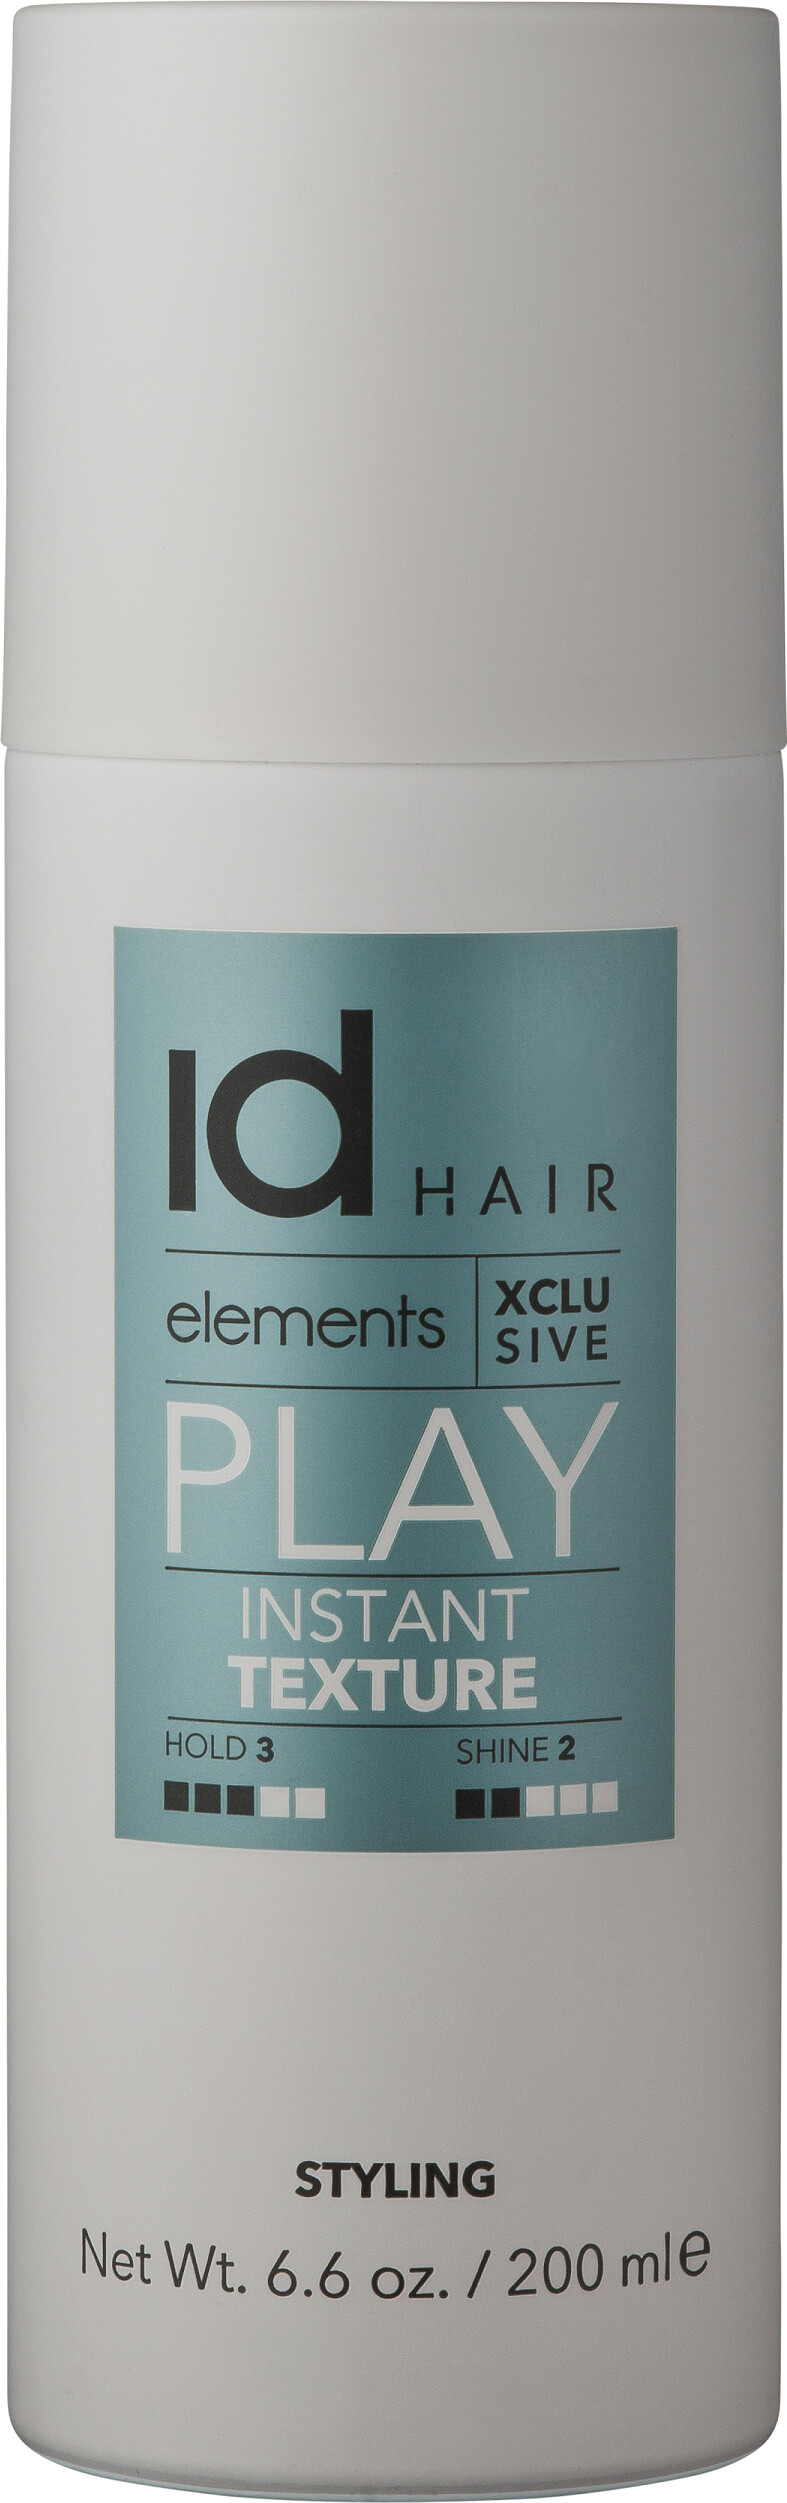 Billede af Id Hair - Elements Xclusive Play Instant Texture - 200 Ml hos Gucca.dk